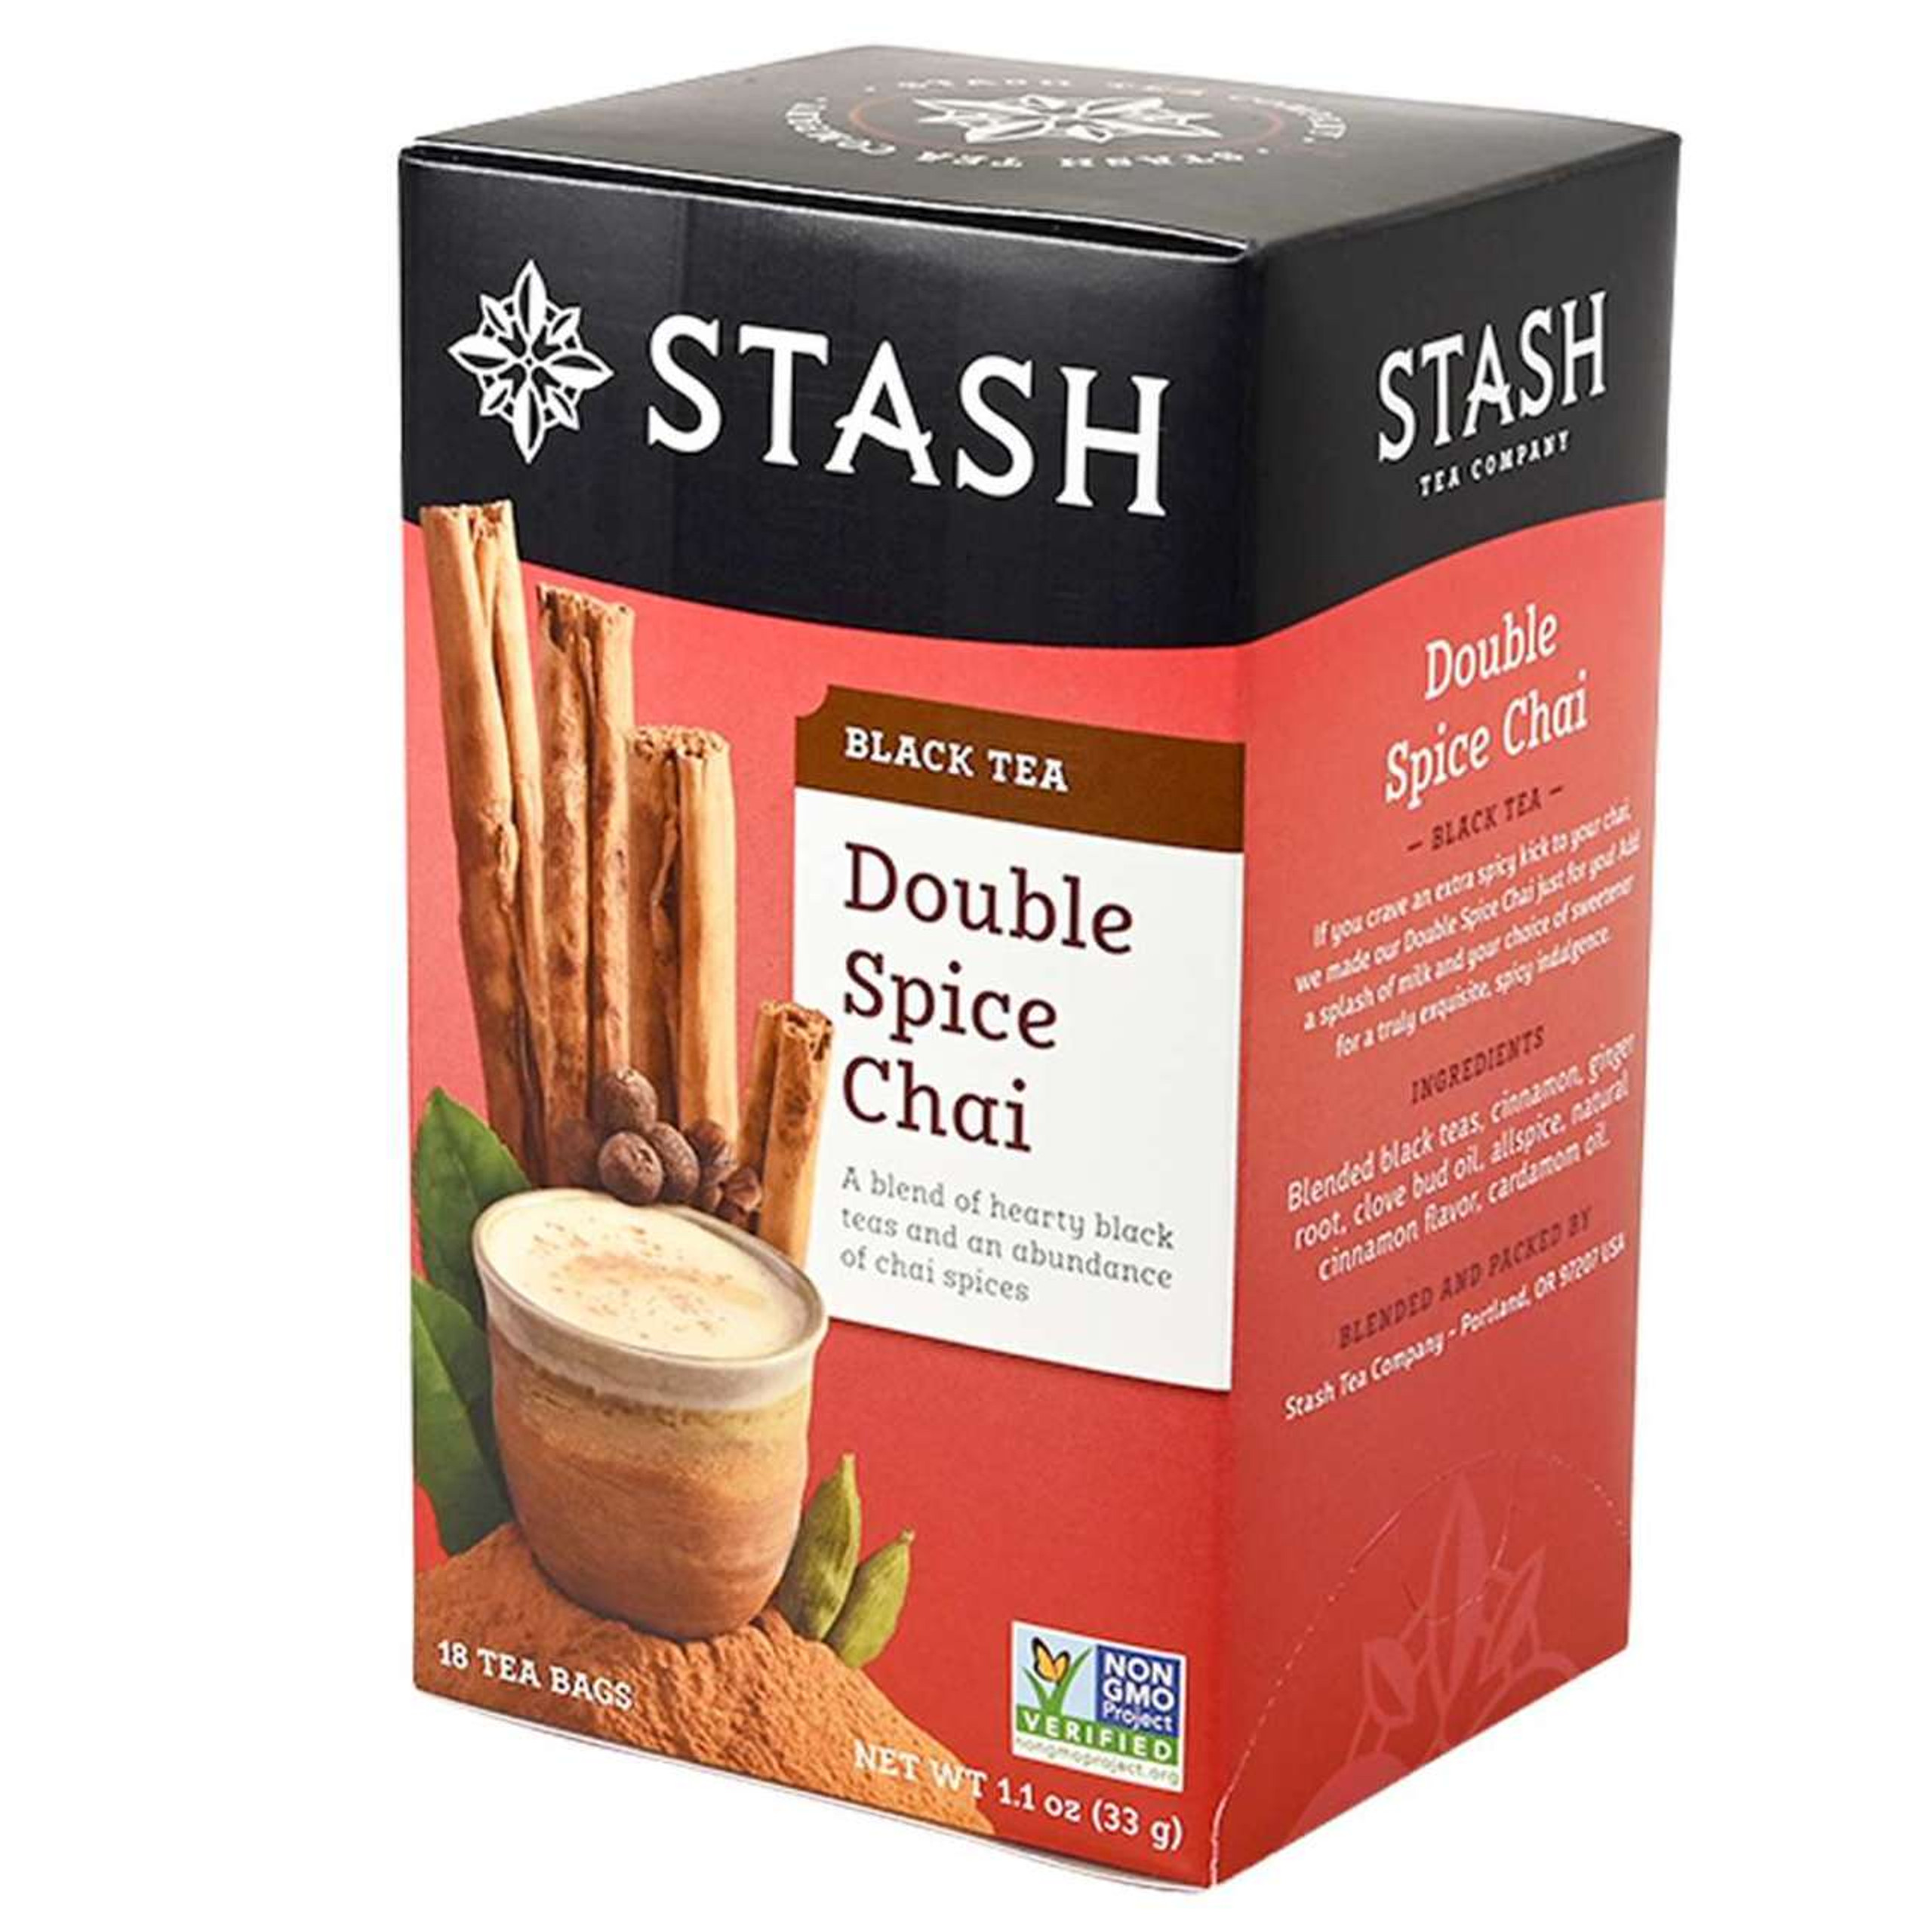 Stash Double Spice Chai Black Tea - 18 count